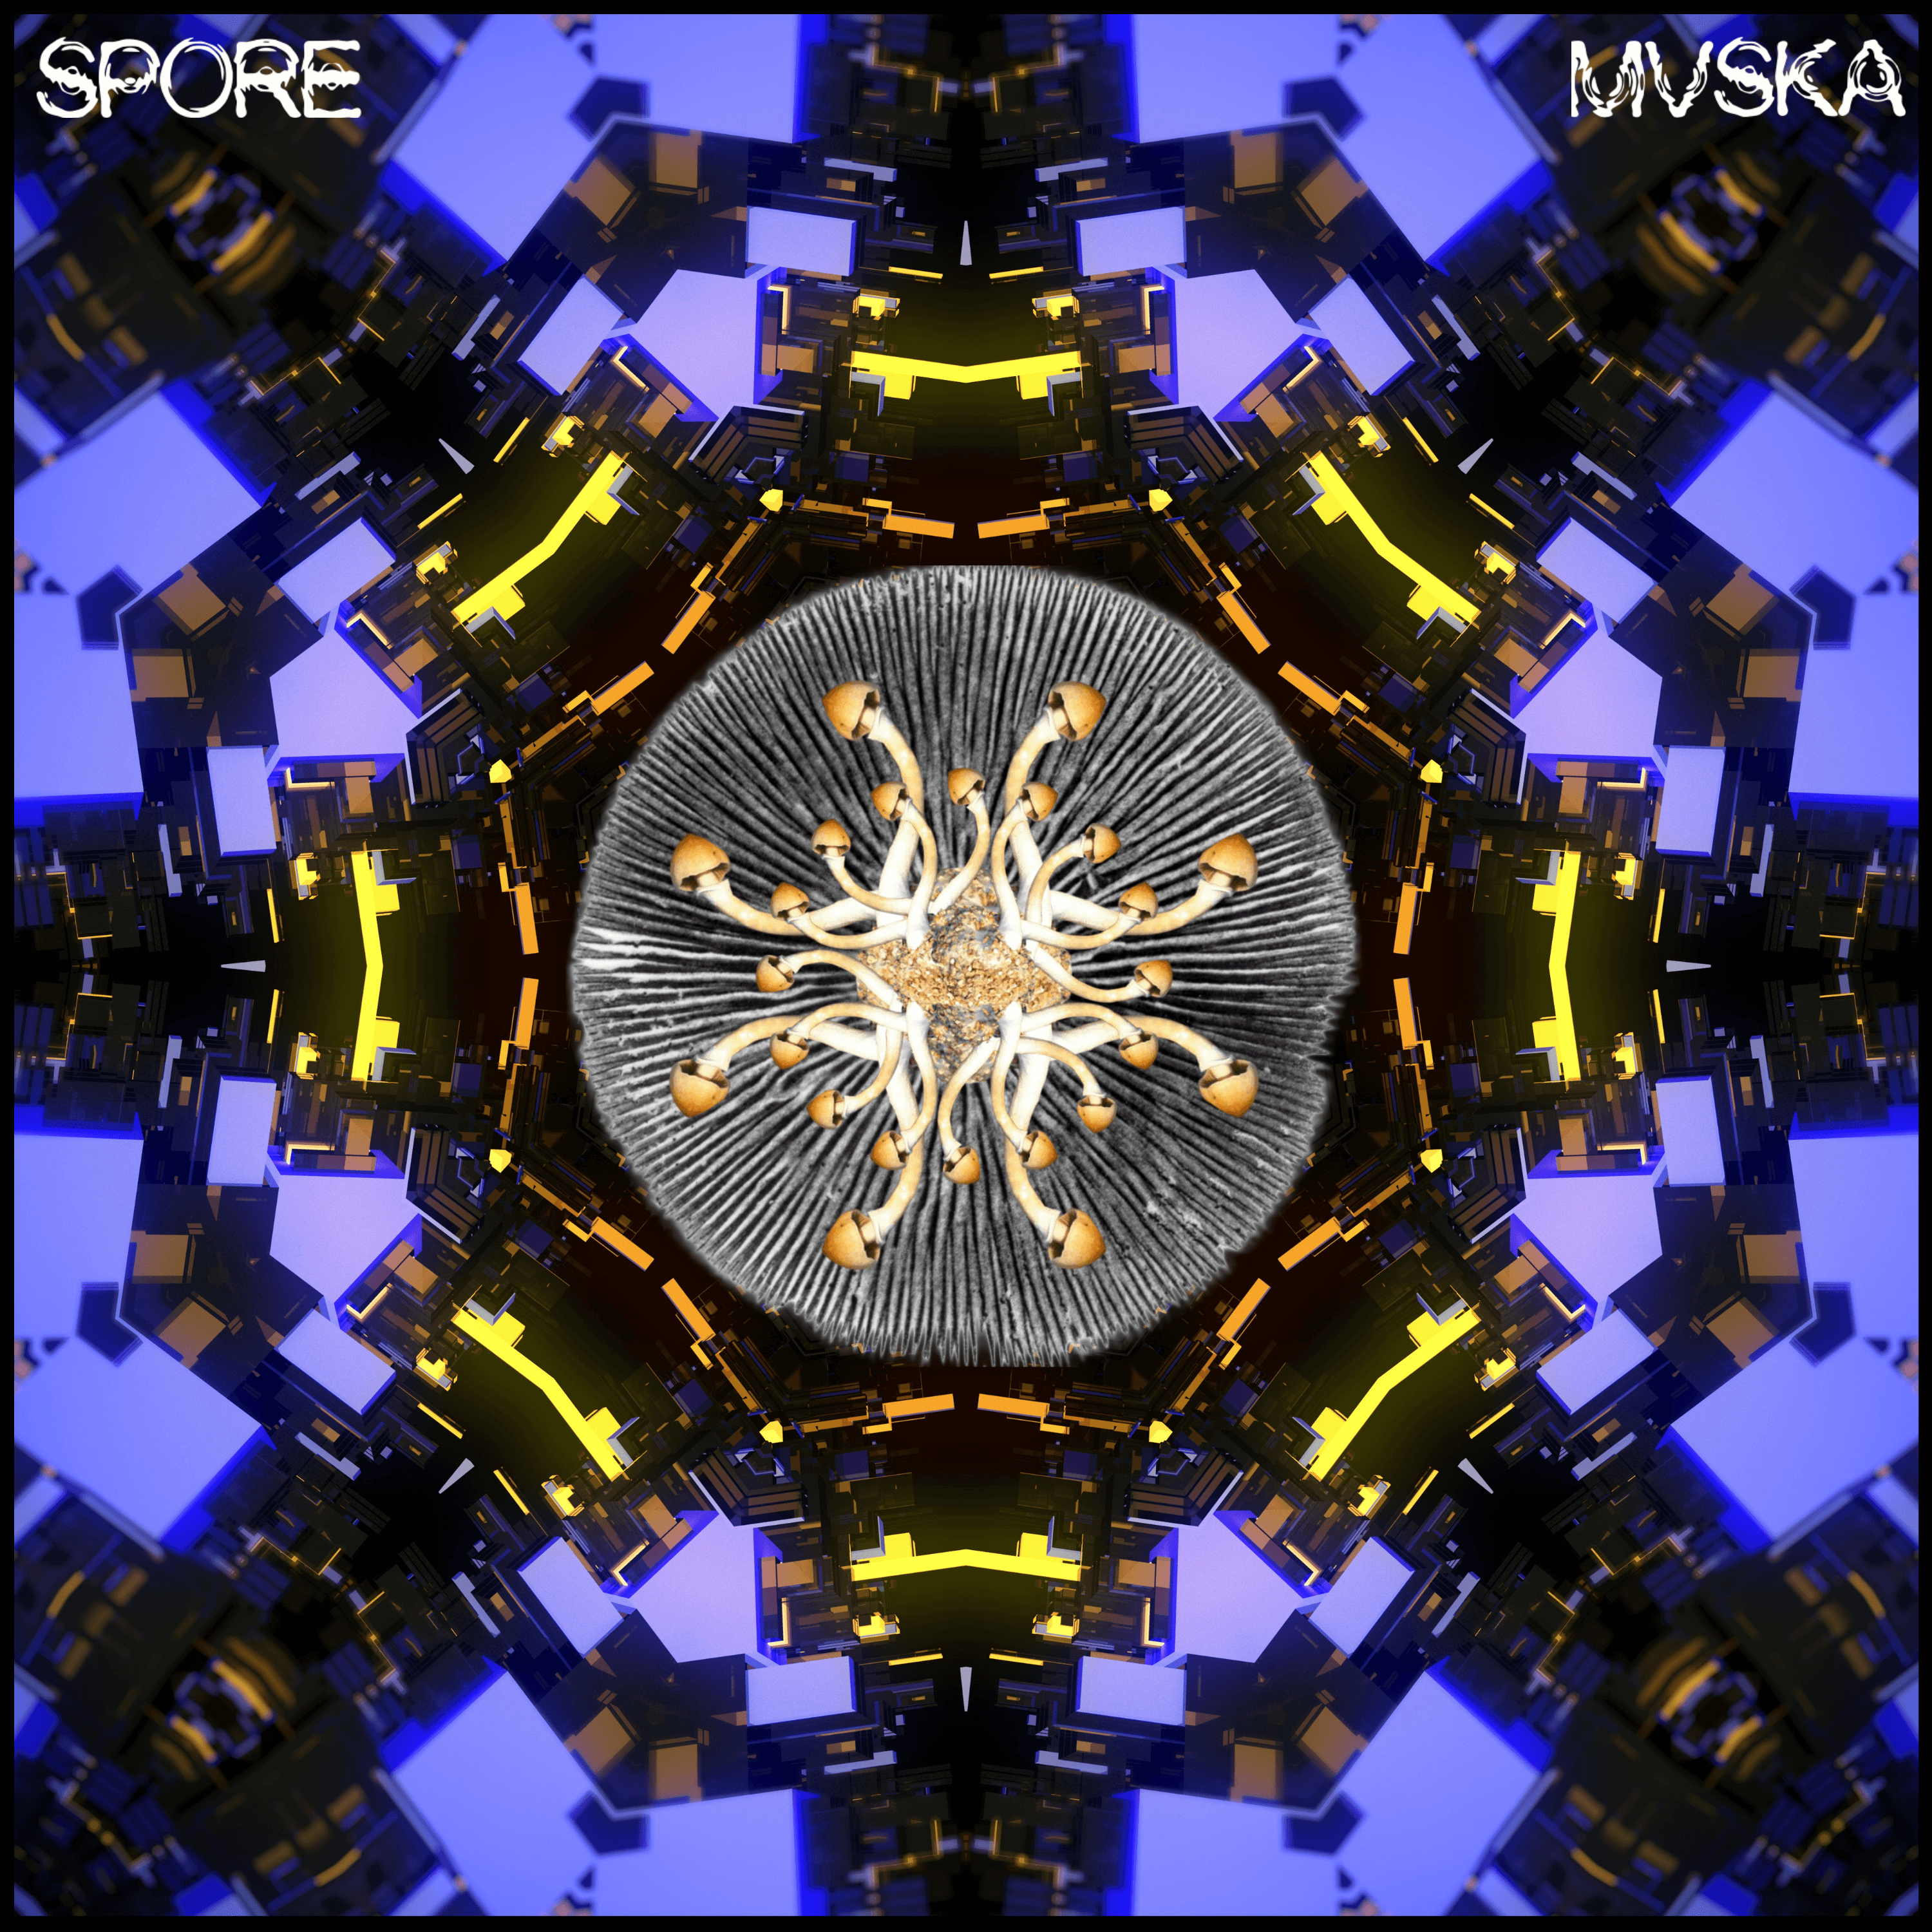 MVSKA Brings Fury and Bass with Latest Single ‘Spore’